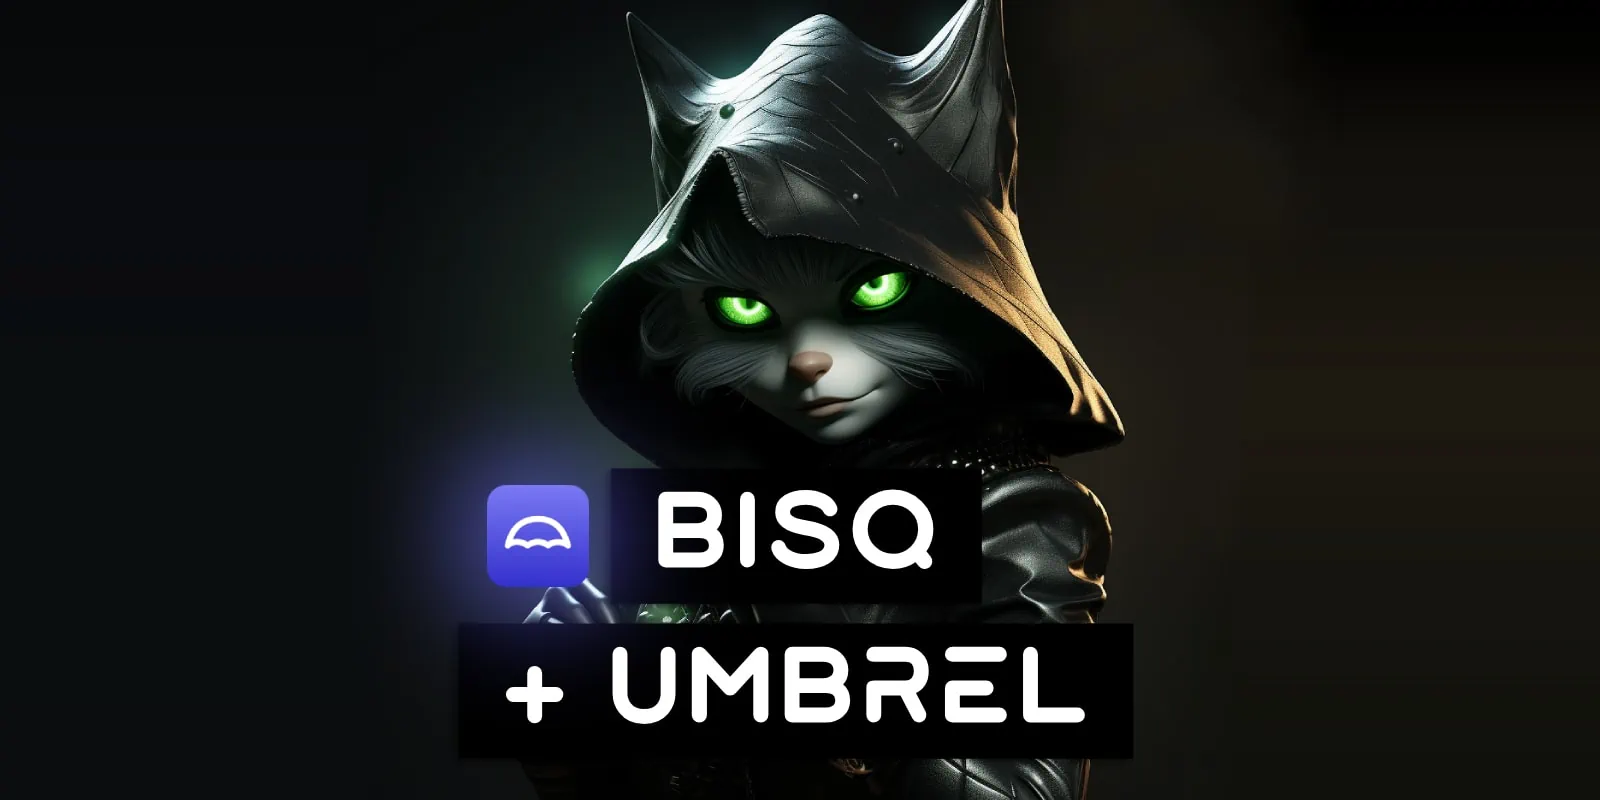 Connect Bisq To Umbrel